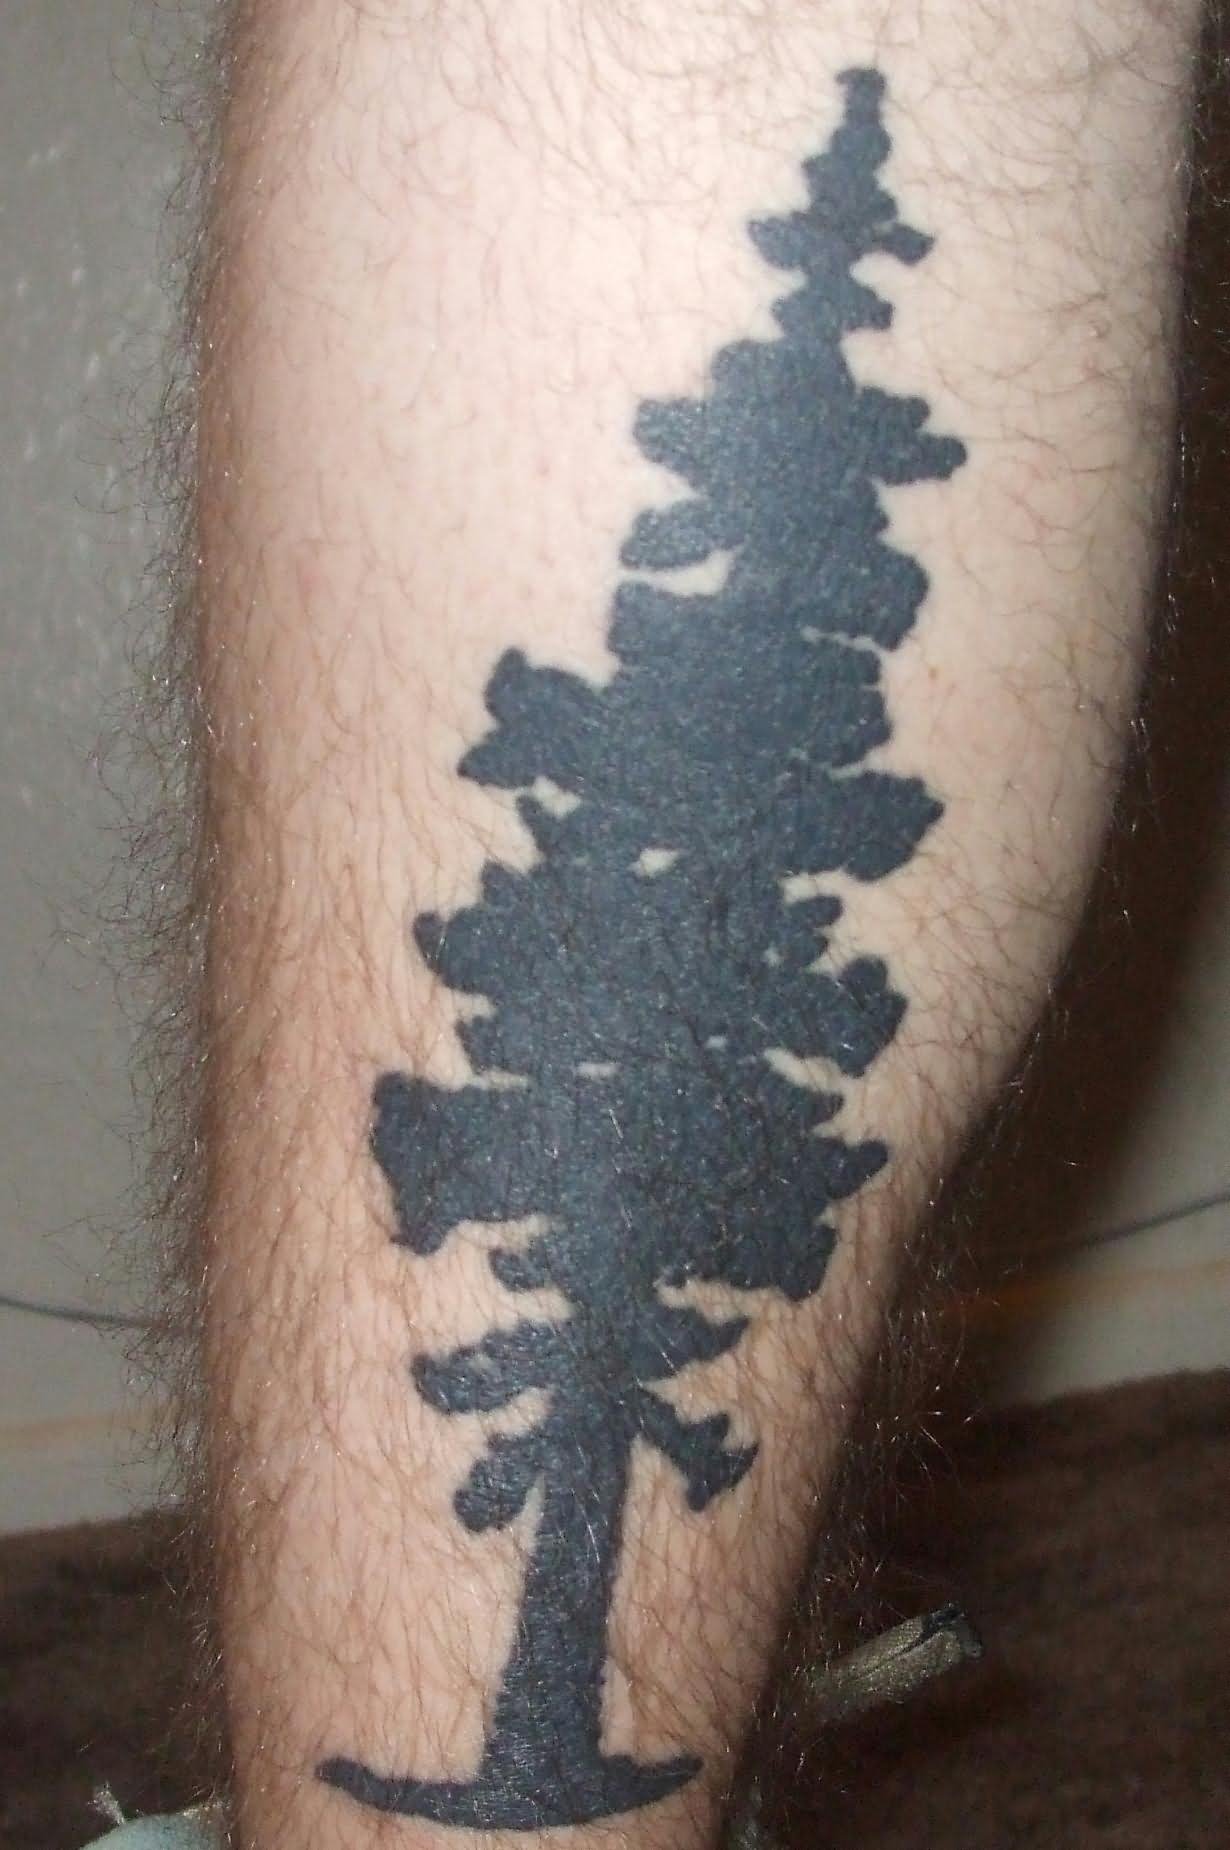 Silhouette Tree Tattoo Design For Leg Calf